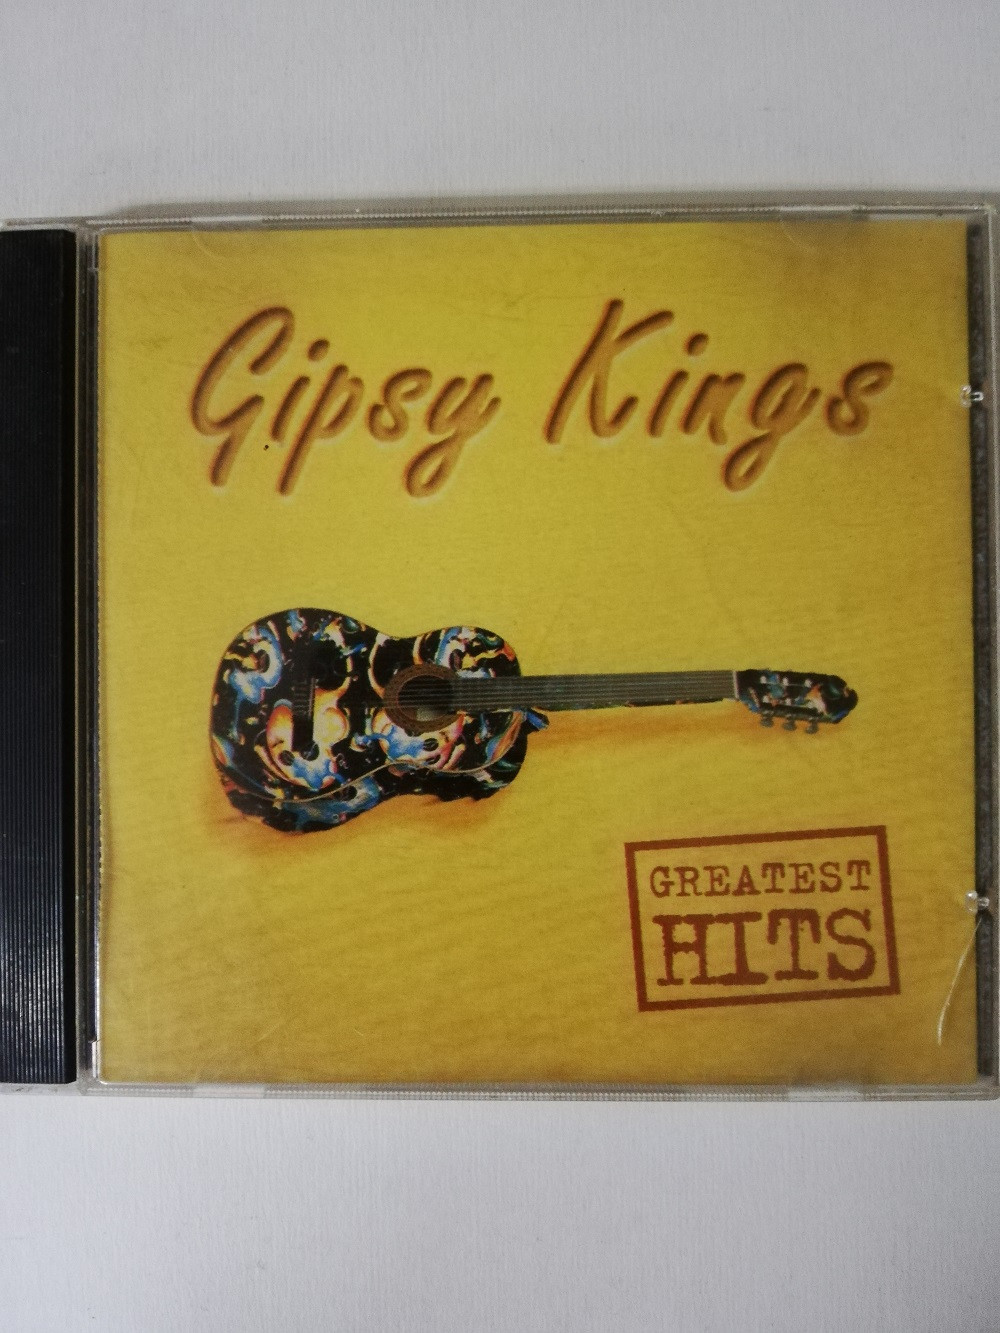 Imagen CD GIPSY KING - GREATEST HITS 1